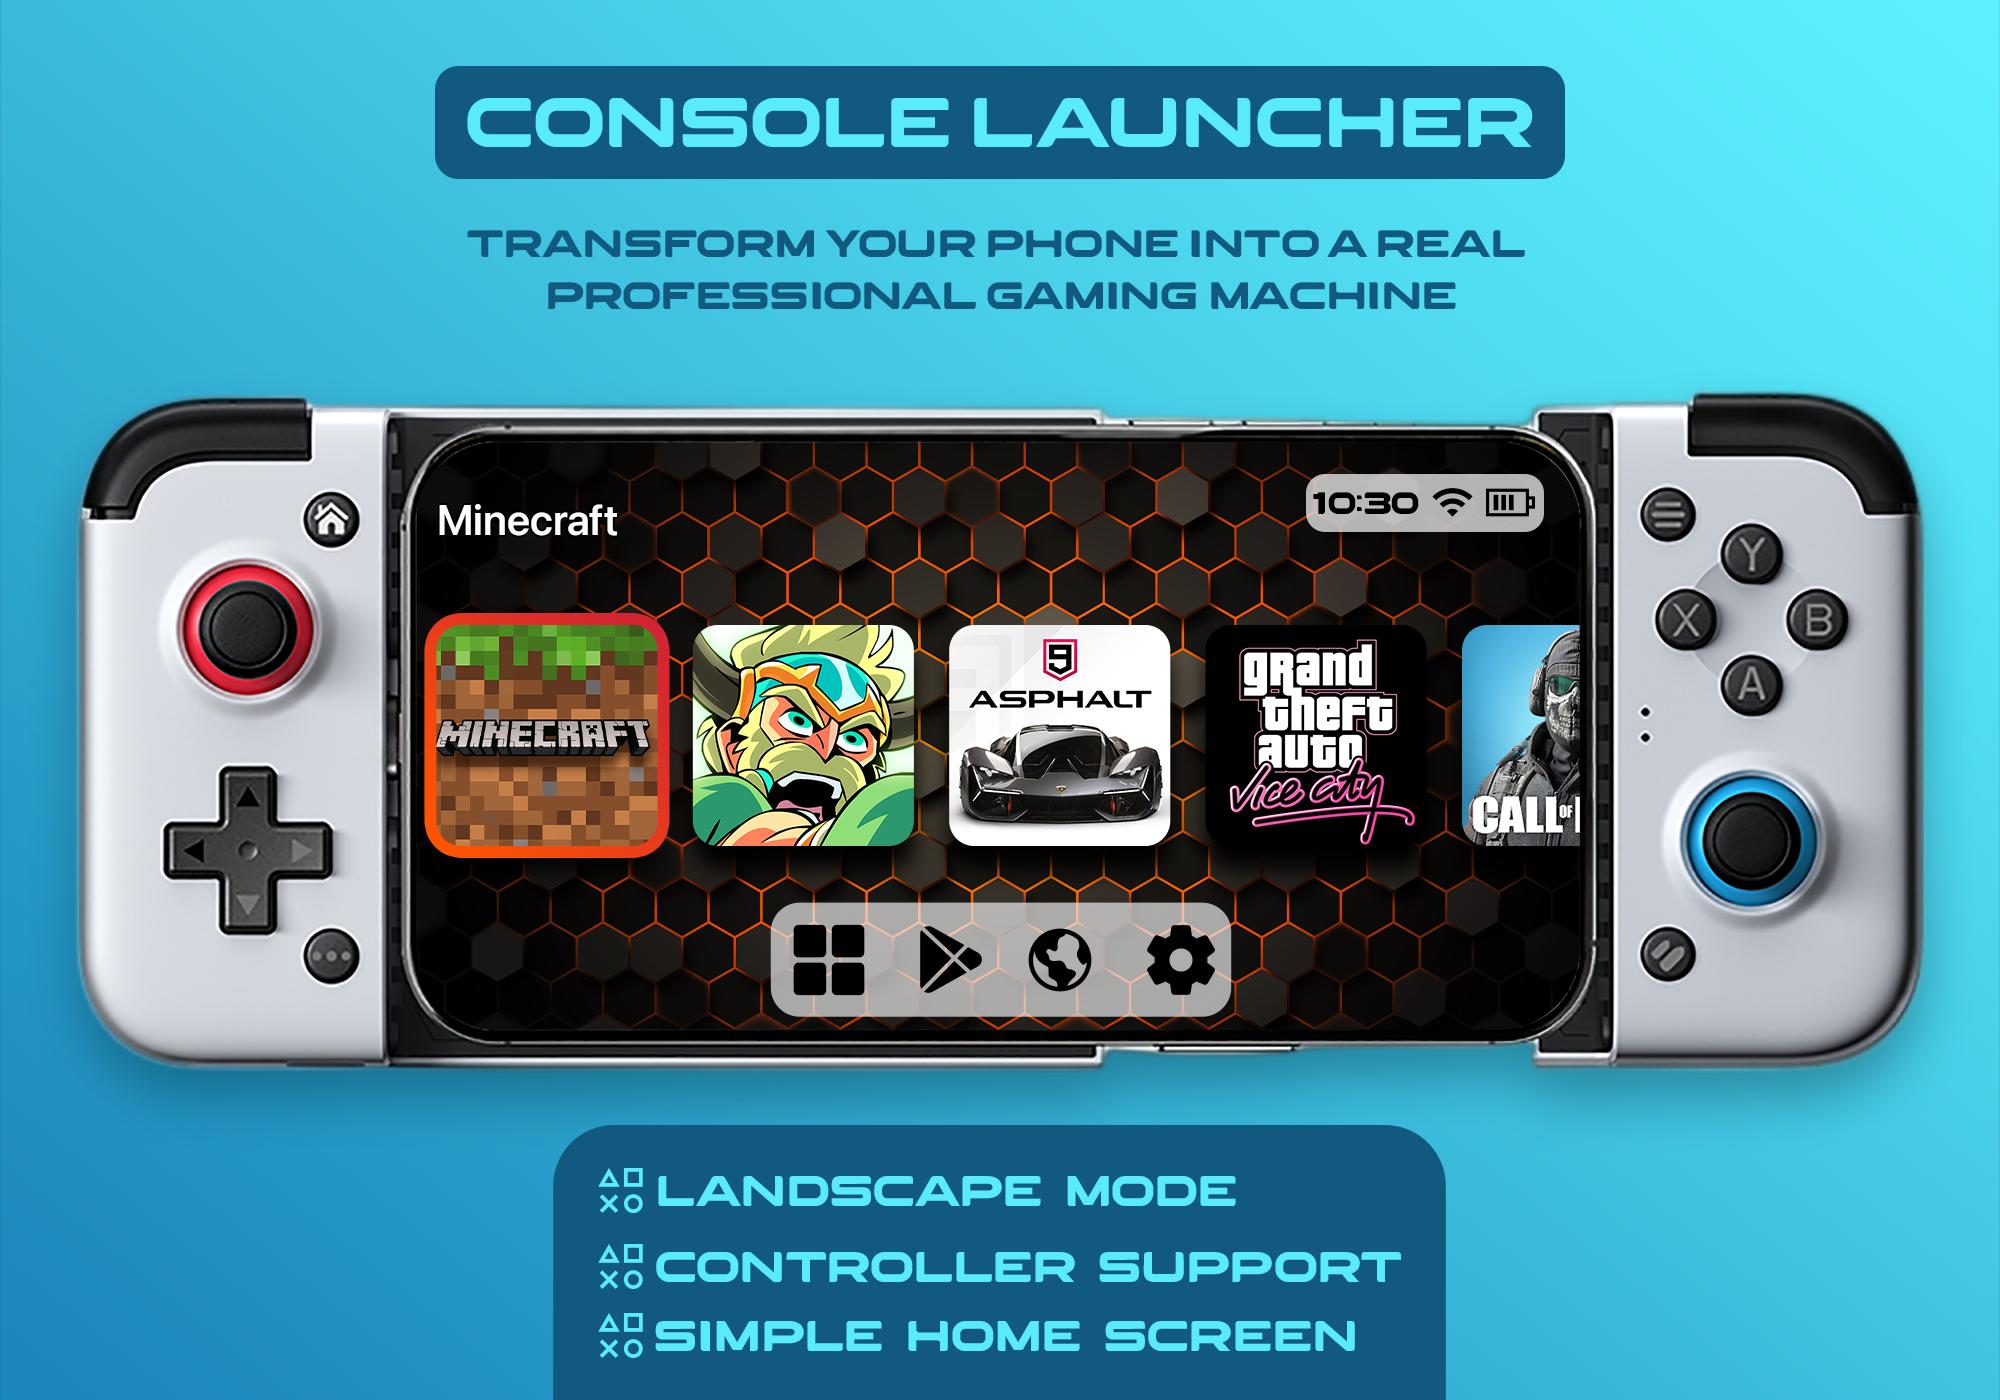 Юнитики купить. Creative Console Launcher. Status: Launched Consol.